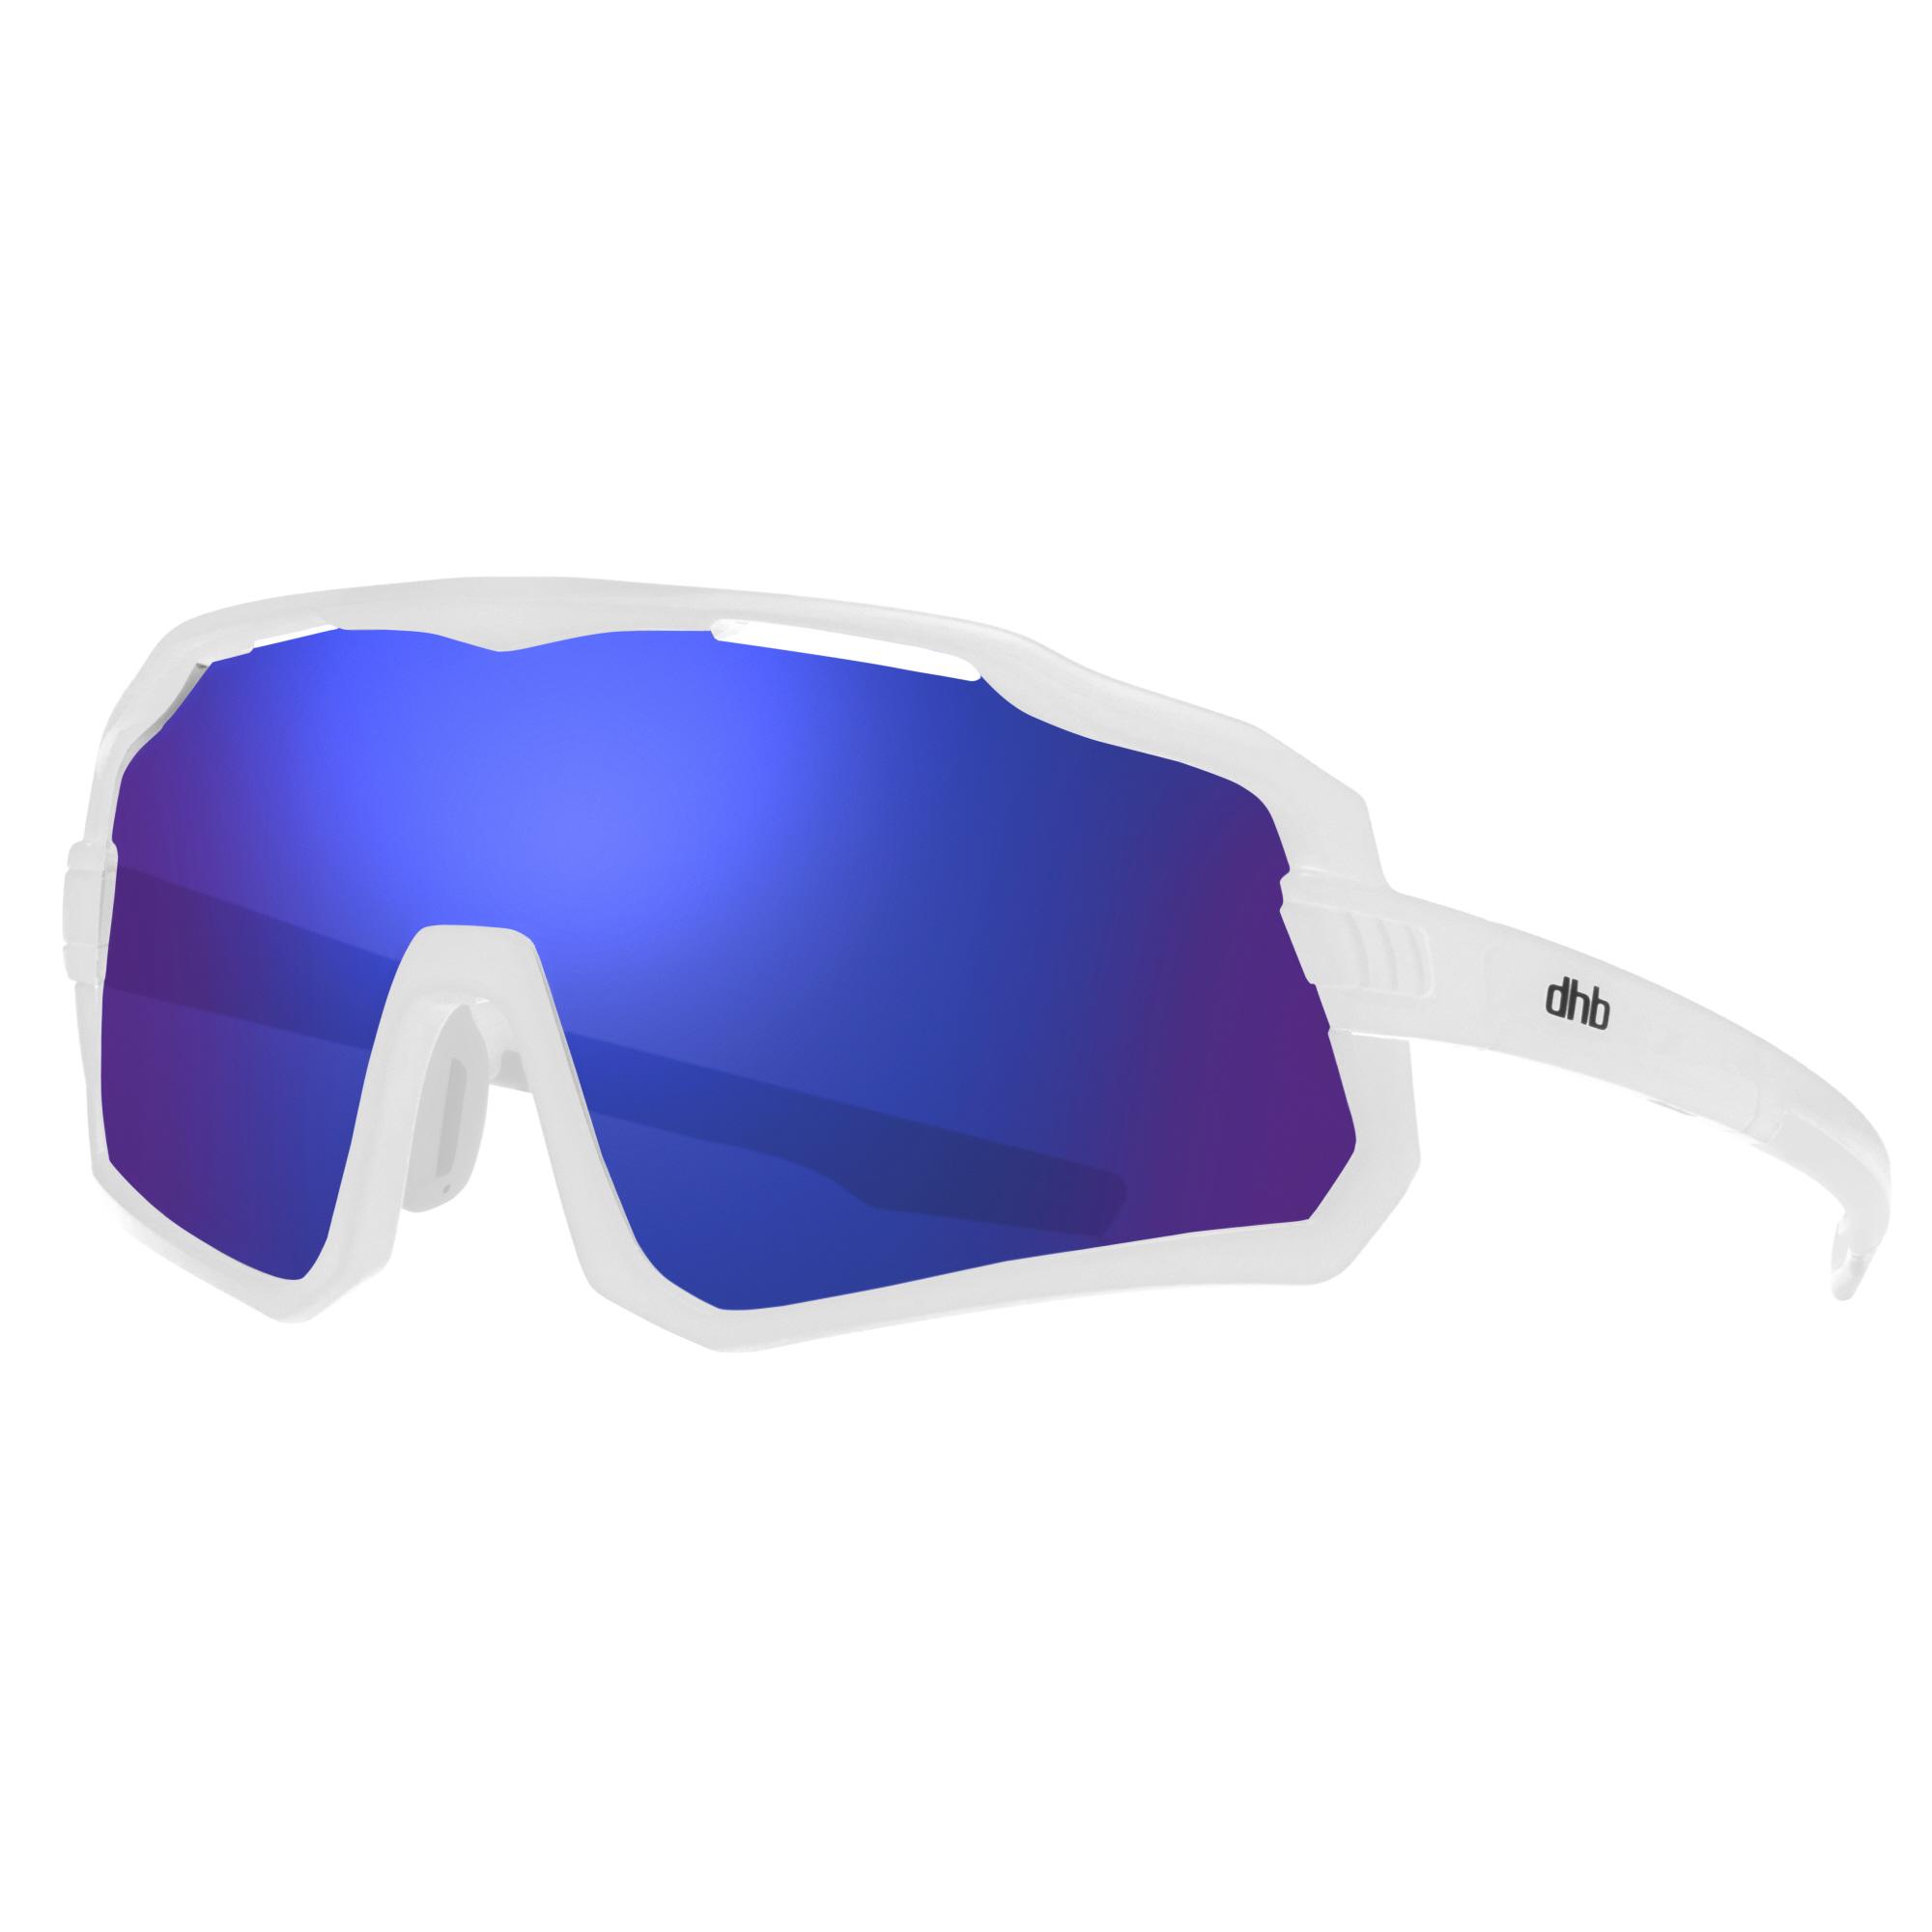 Dhb Aeron Revo Lens Sunglasses - White